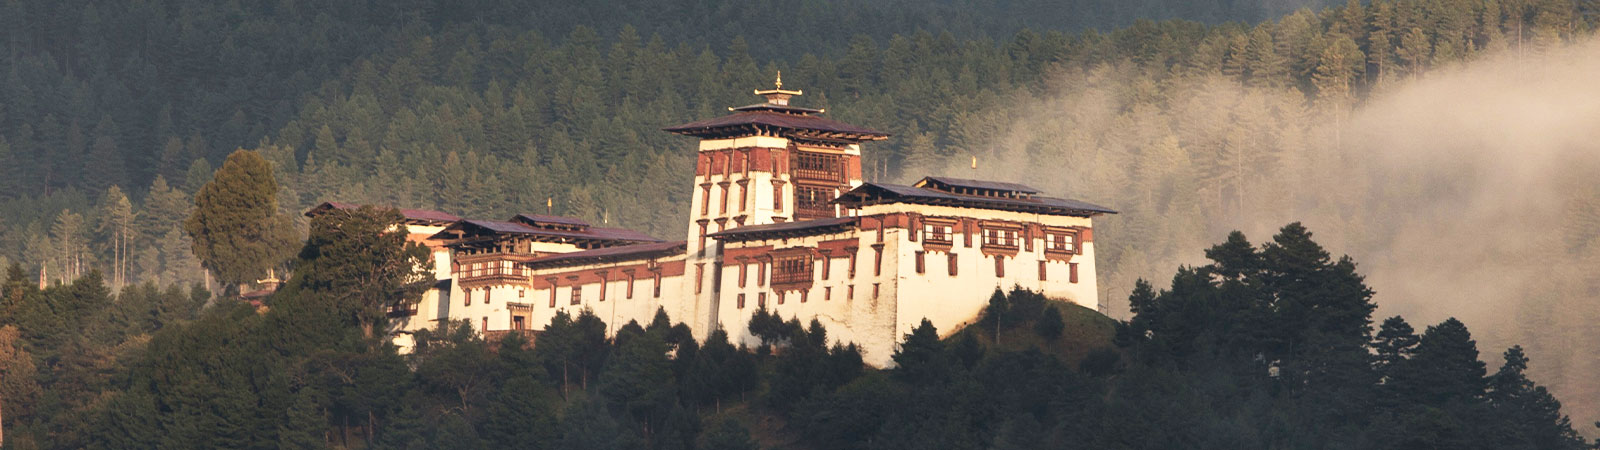 Across Bhutan